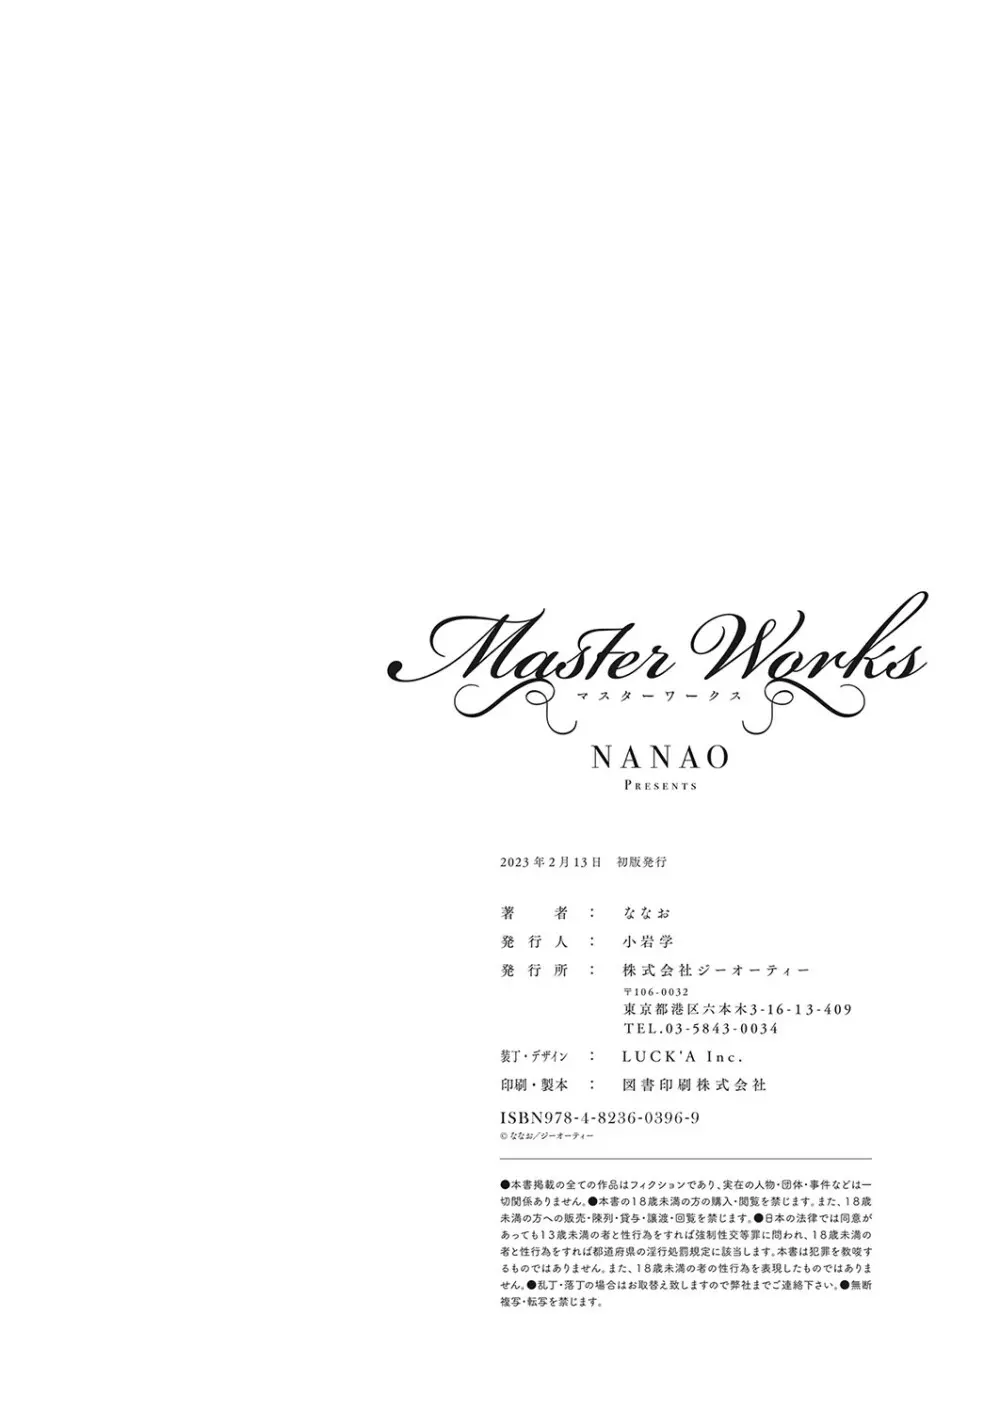 Master Works 177ページ